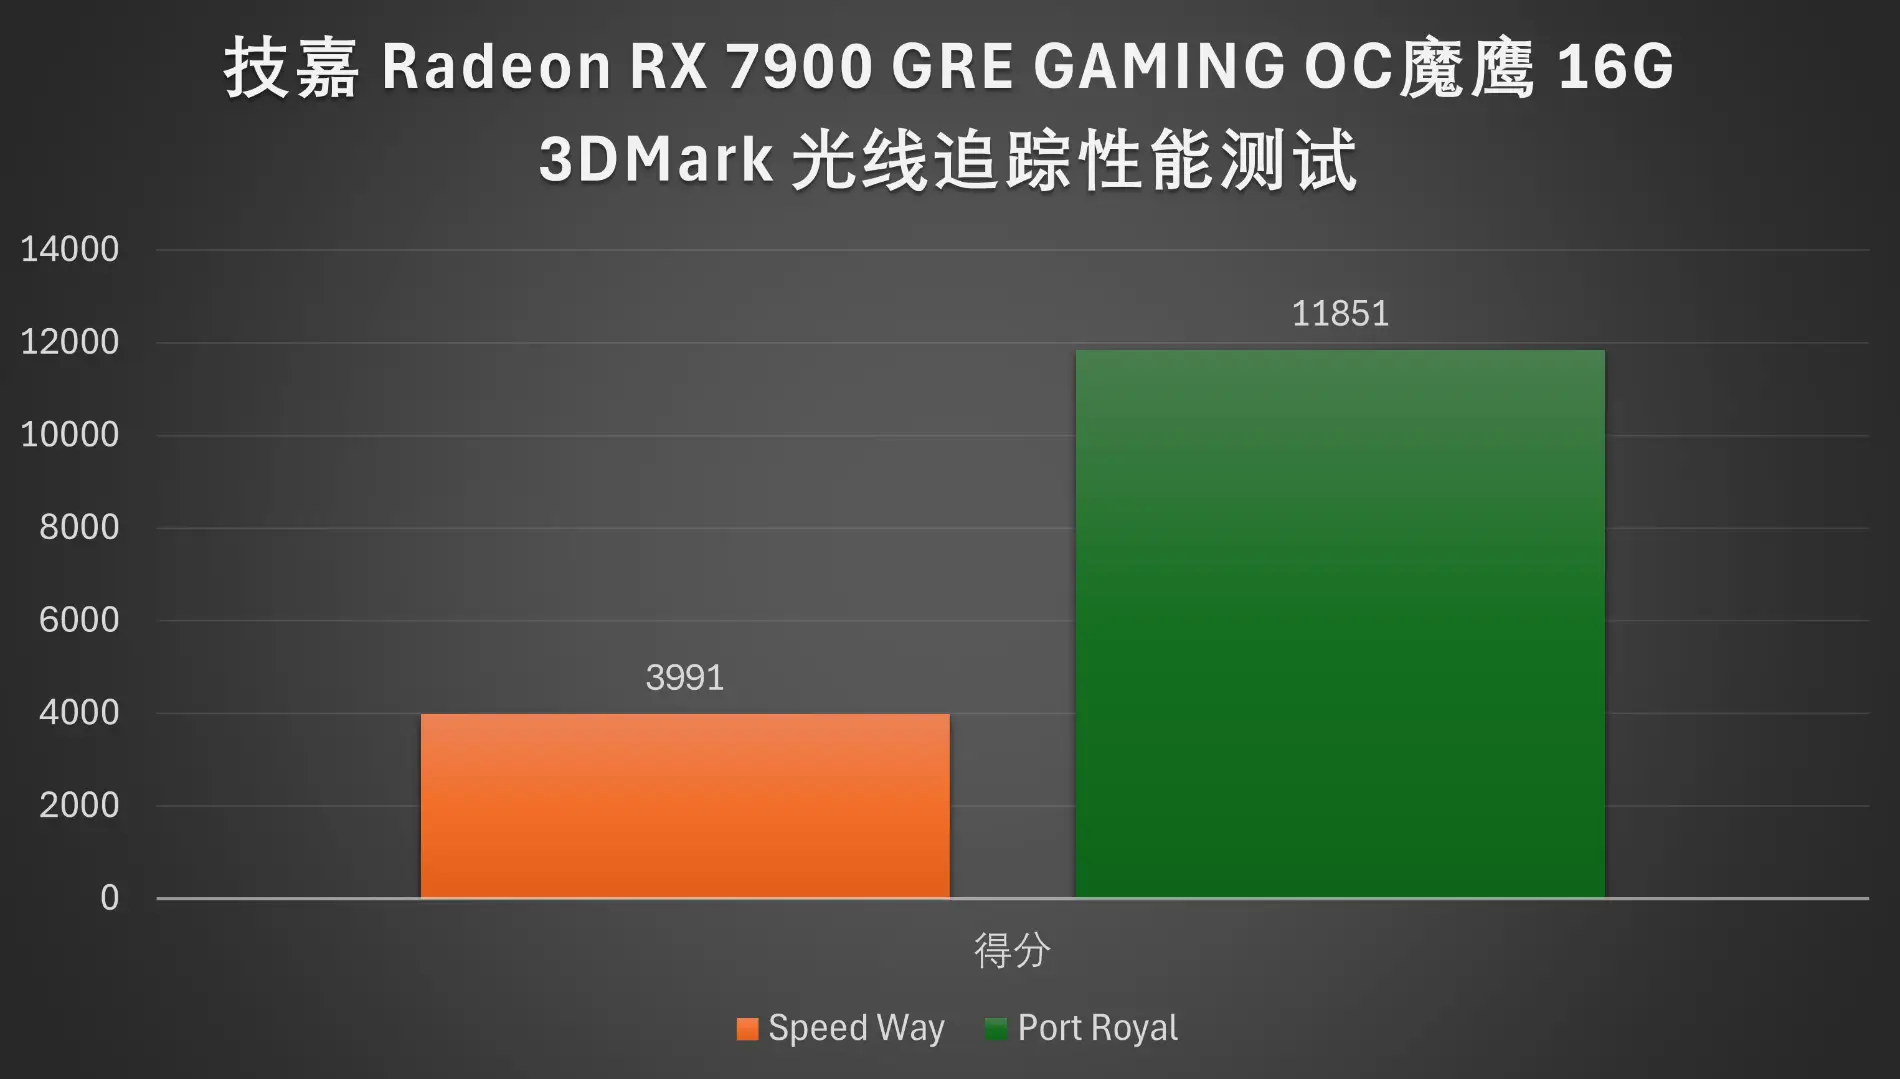 GeForce 7300GT显卡：曾经辉煌如何？驱动更新为何重要？  第6张